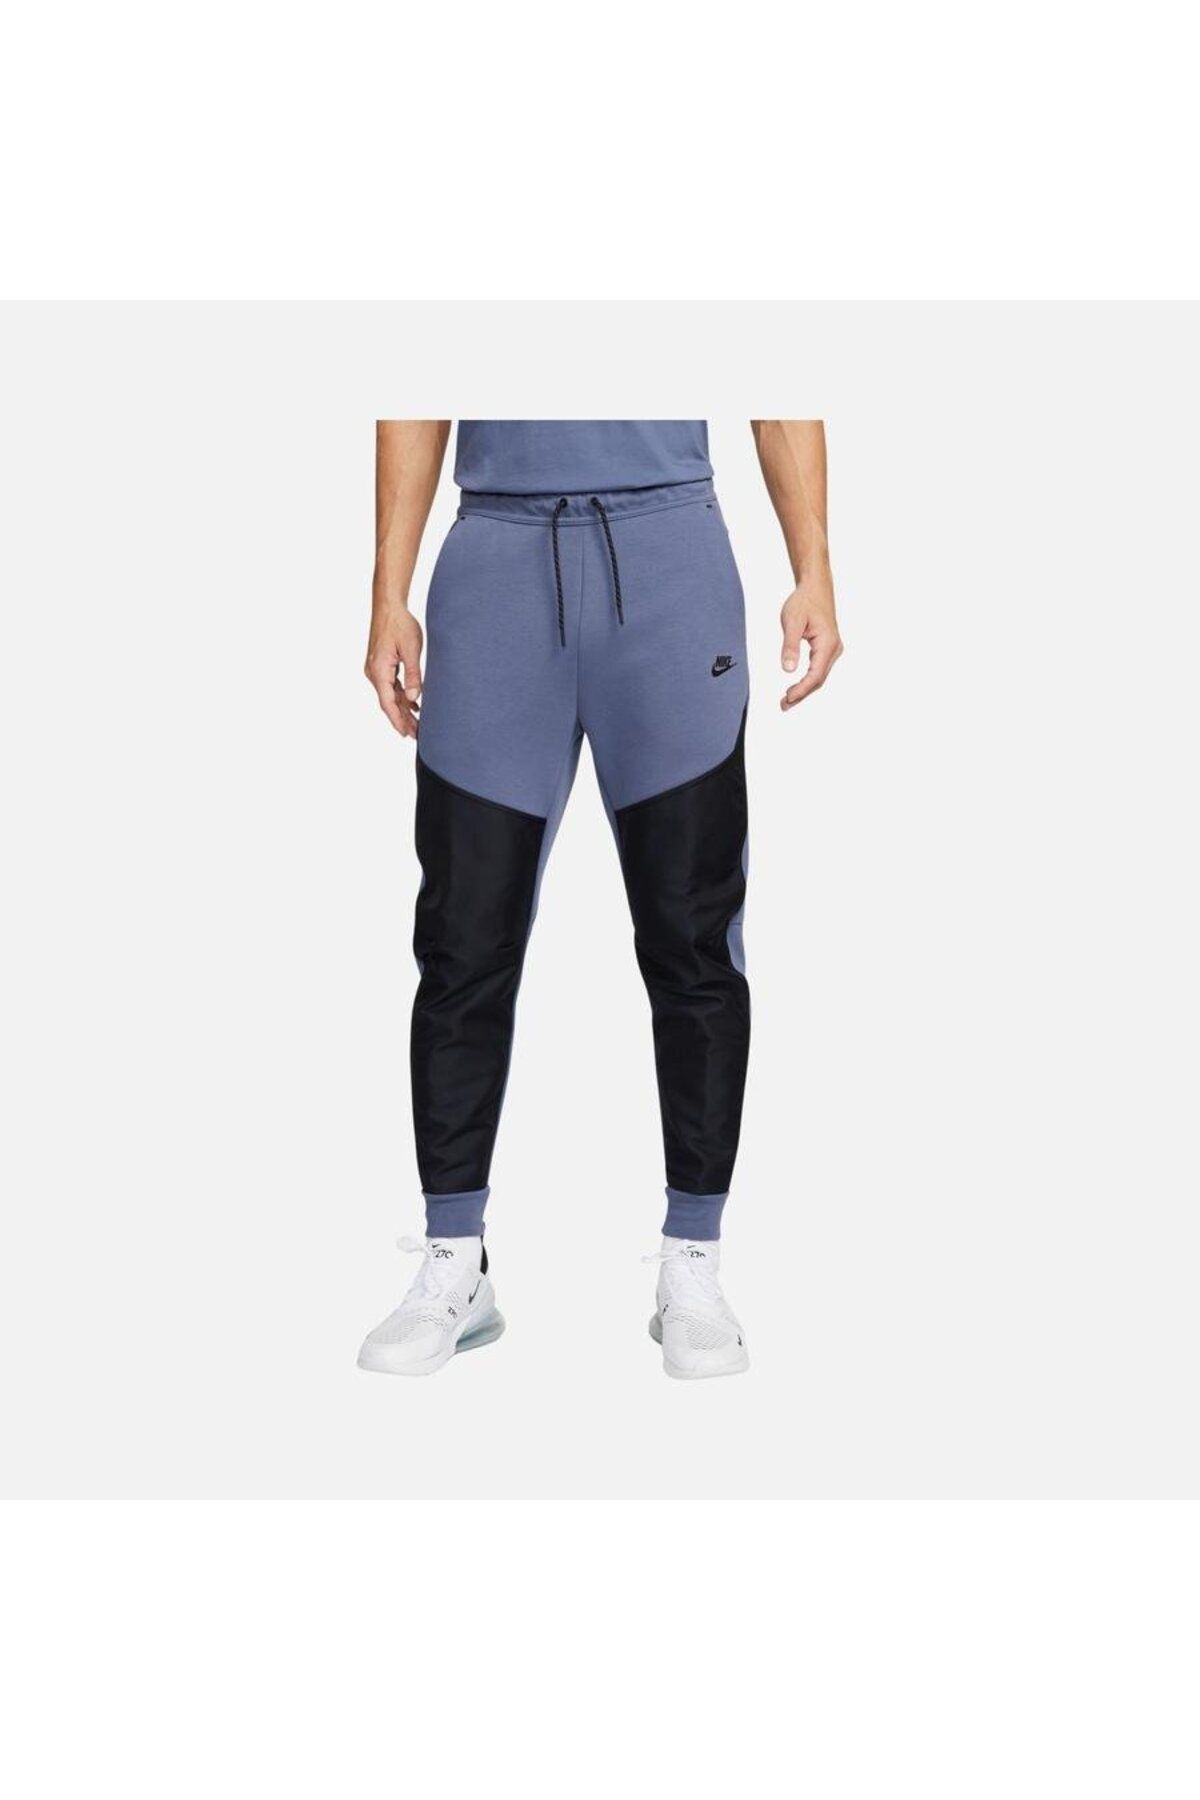 Nike Tech Fleece Sweatpants Navy